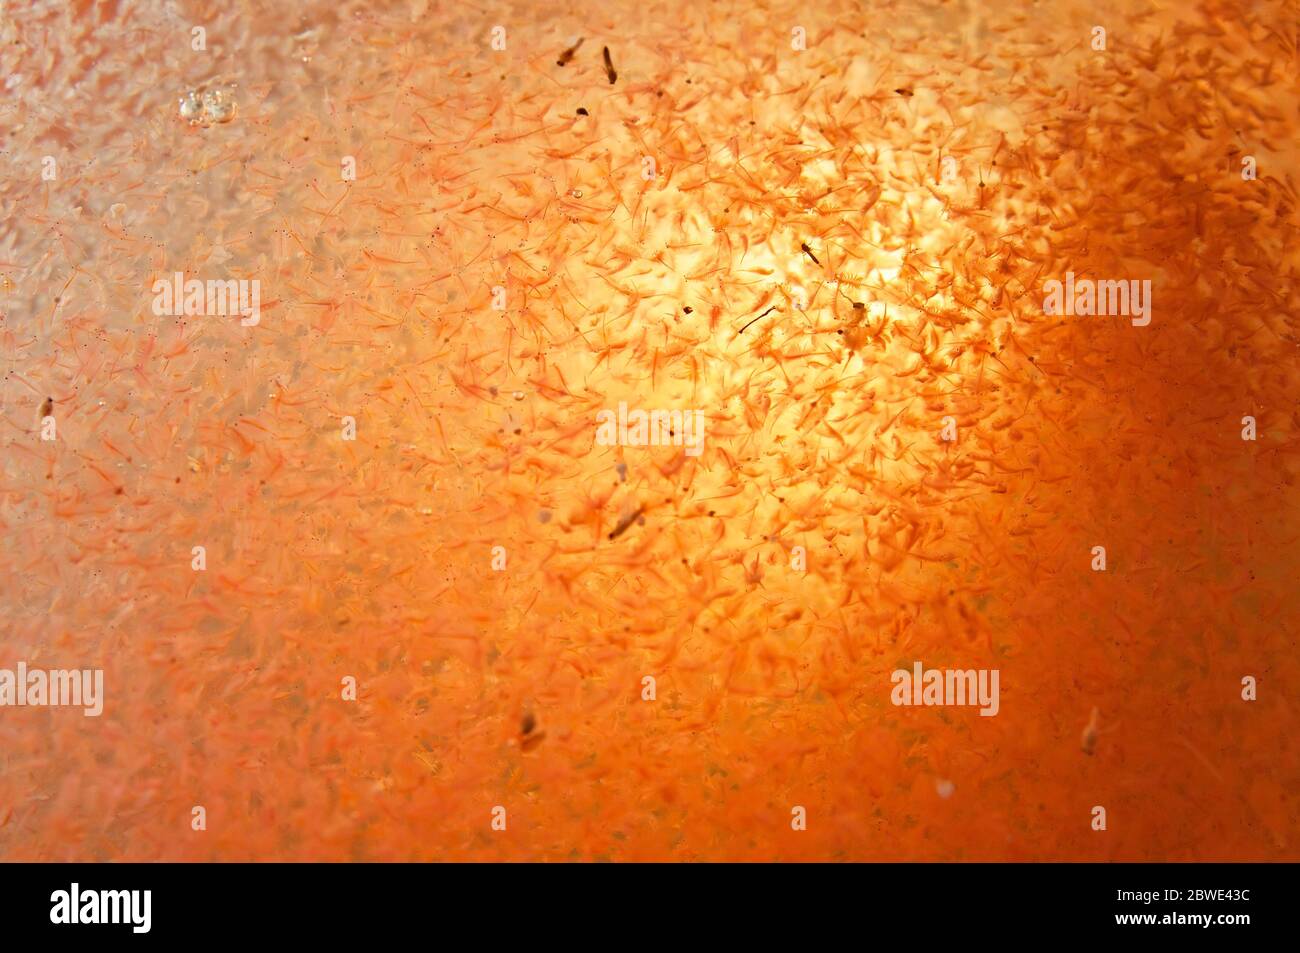 Krill in closeup Stock Photo